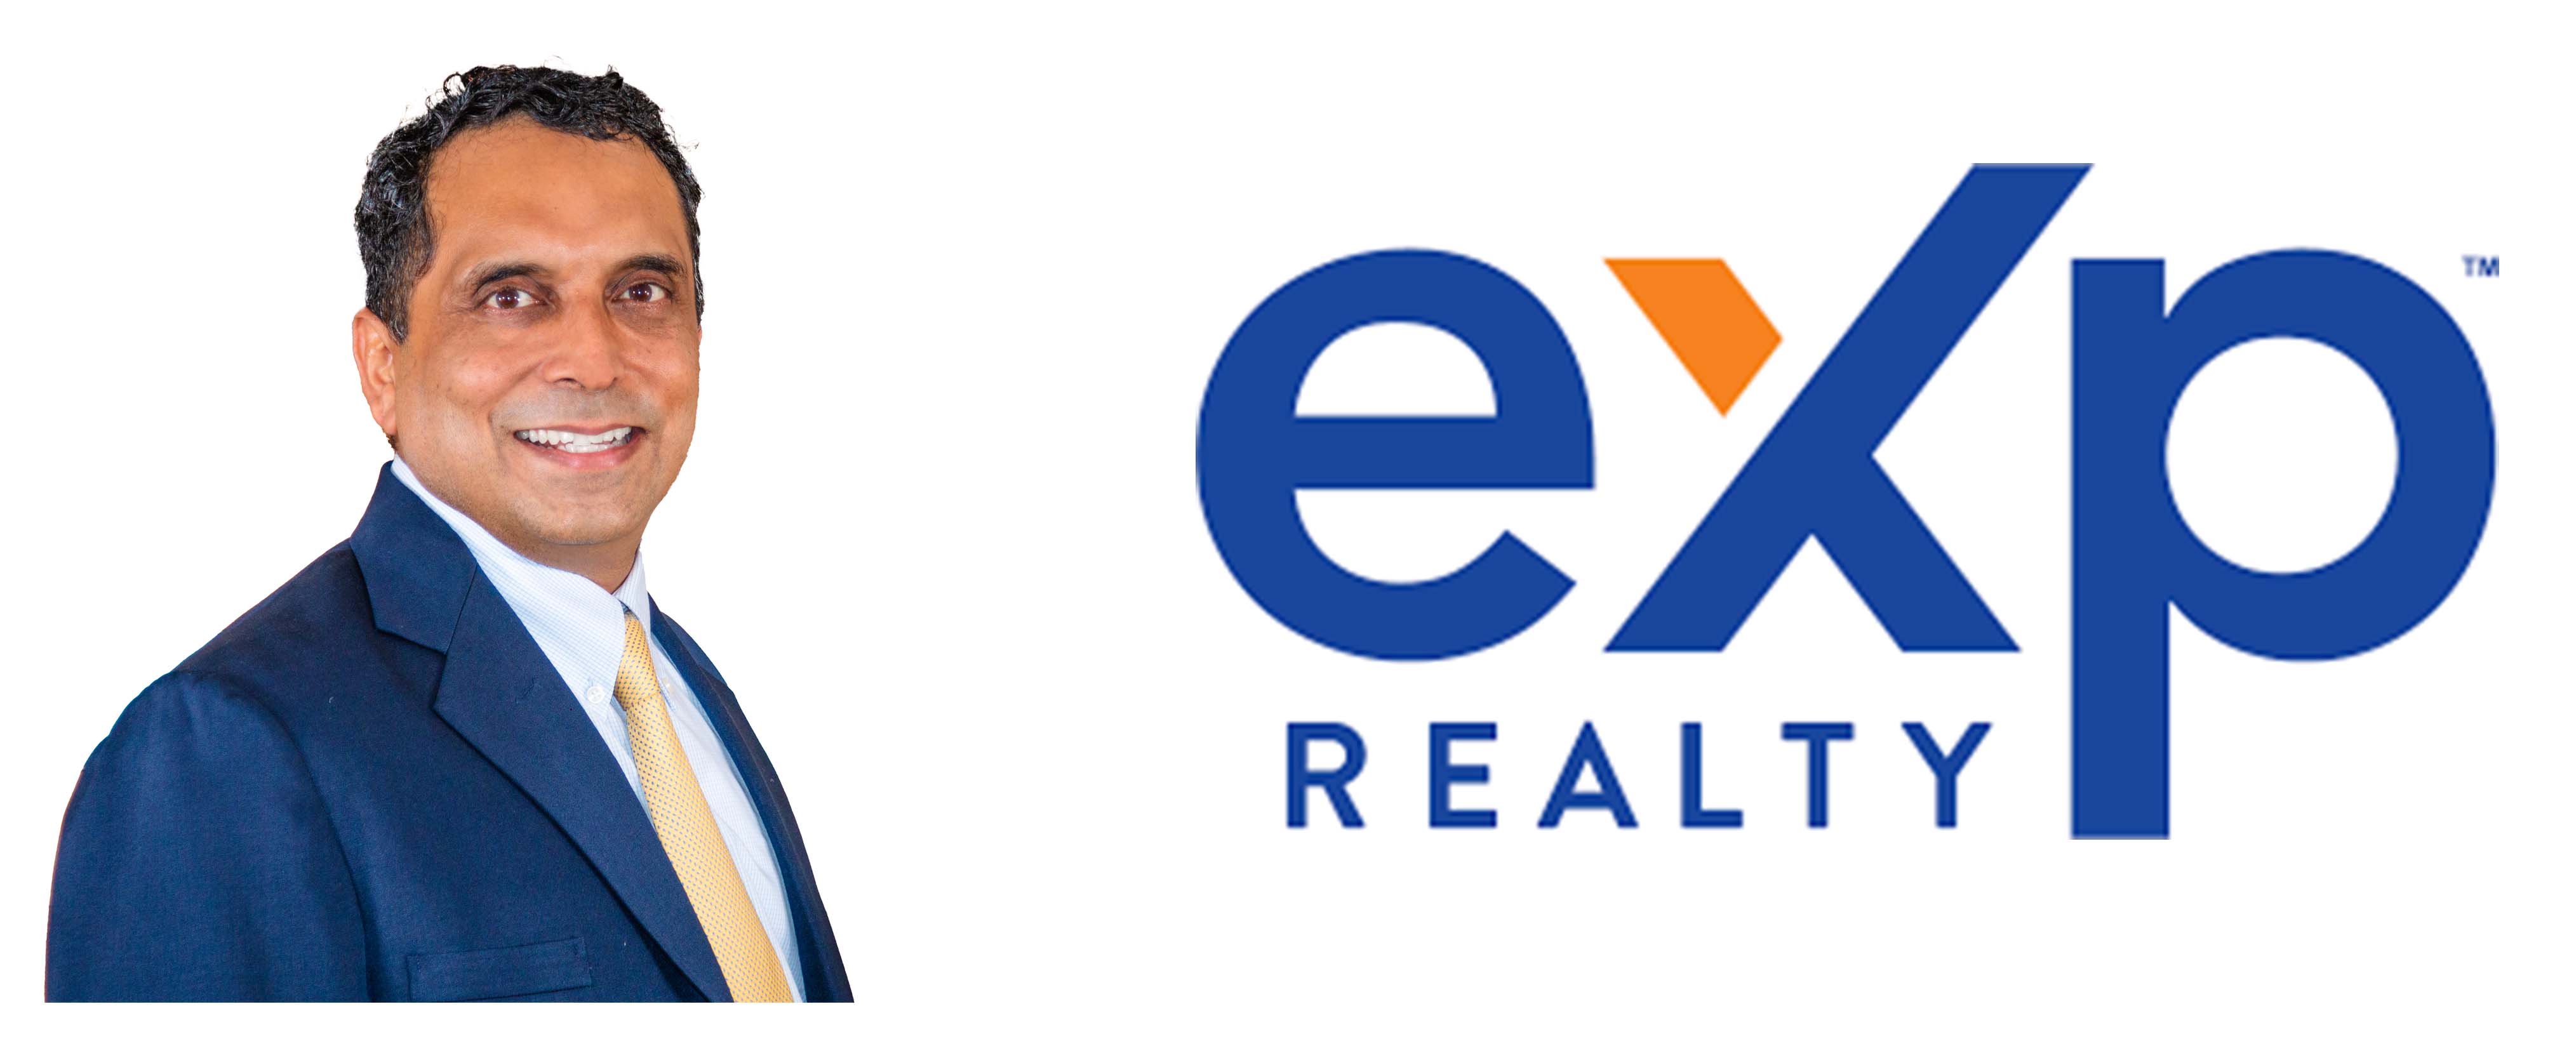 Real Estate Expert in Central Florida | Lake Mary, Longwood, & Orlando Realtors - Sanjeev Malik - Real Estate Advisor